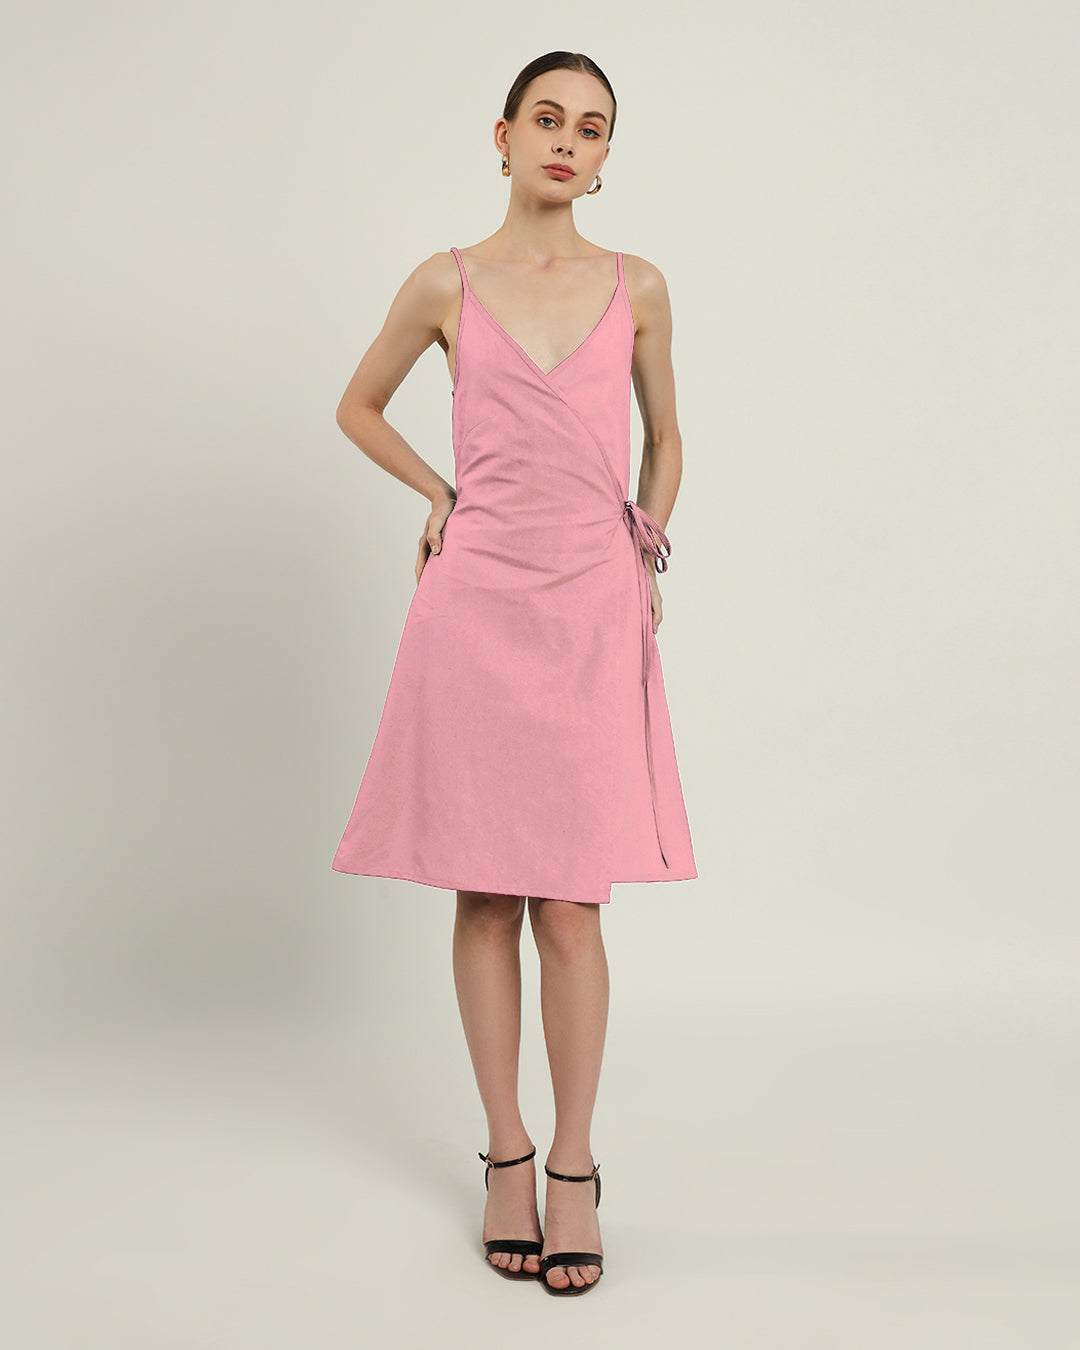 The Chambéry Fondant Pink Dress